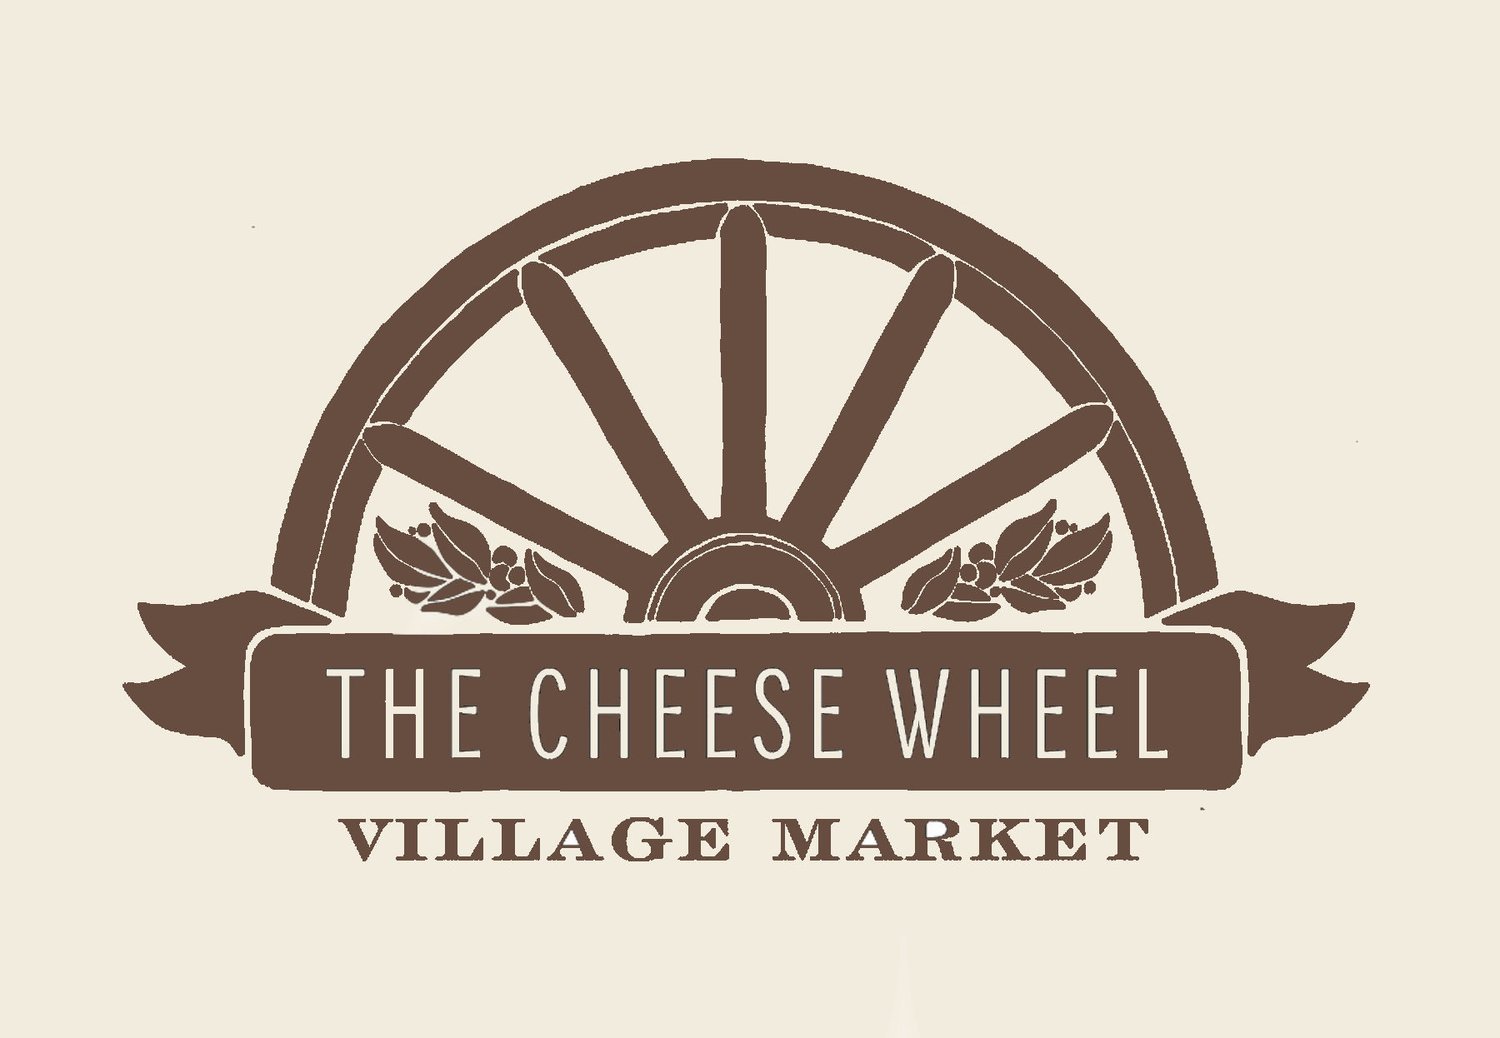 The Cheese Wheel Village Market